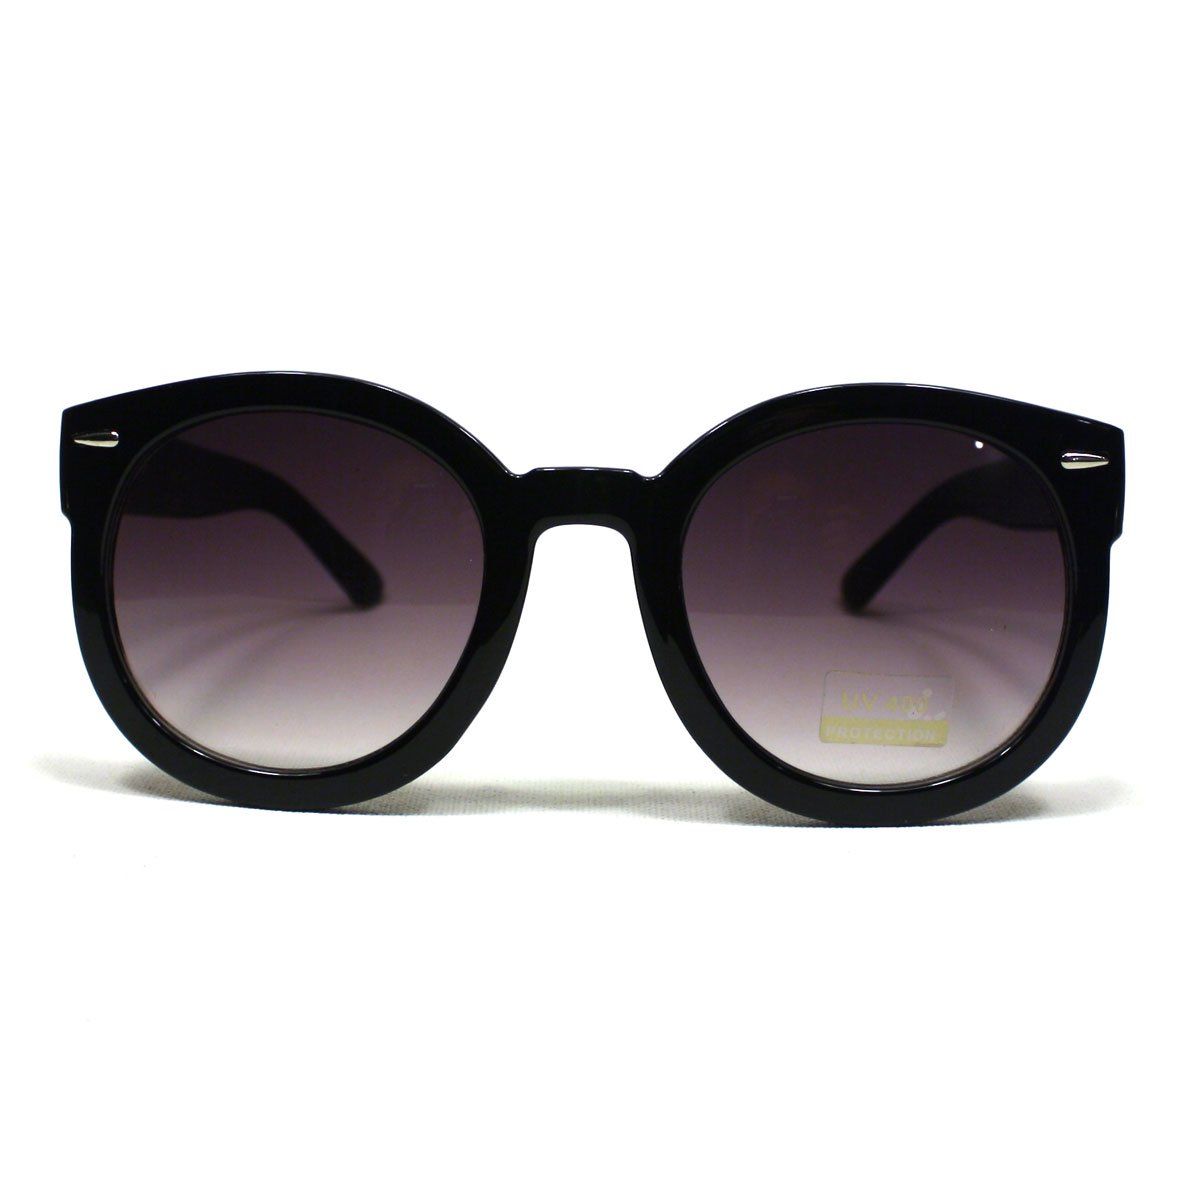 Thick Plastic Frame Round Horned Sunglasses for Women - Black | Walmart (US)